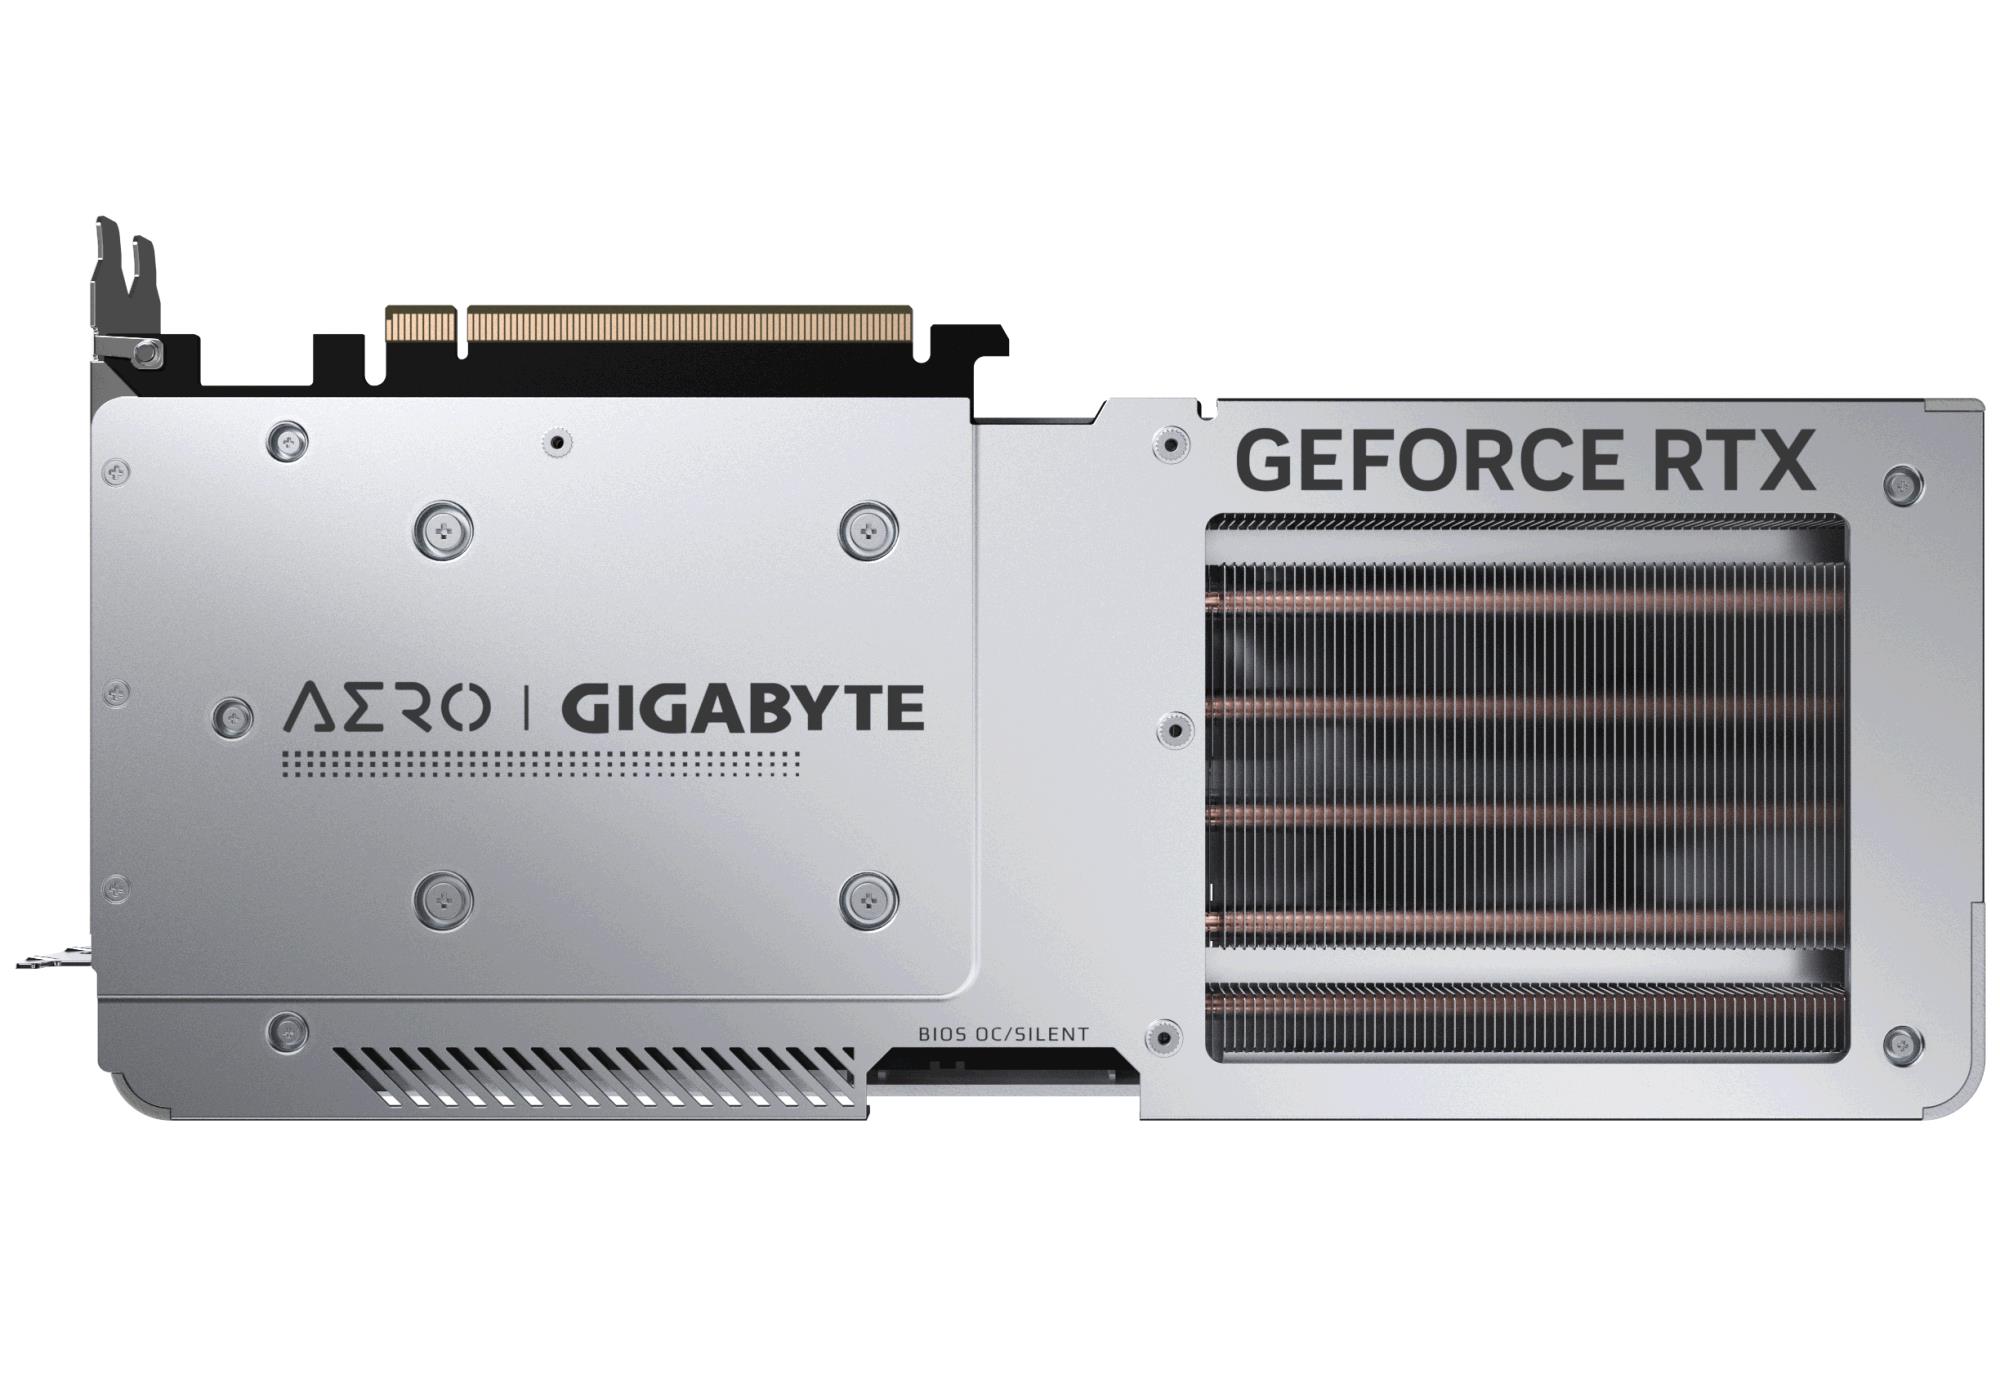 Gigabyte GeForce RTX 4070 SUPER Aero OC